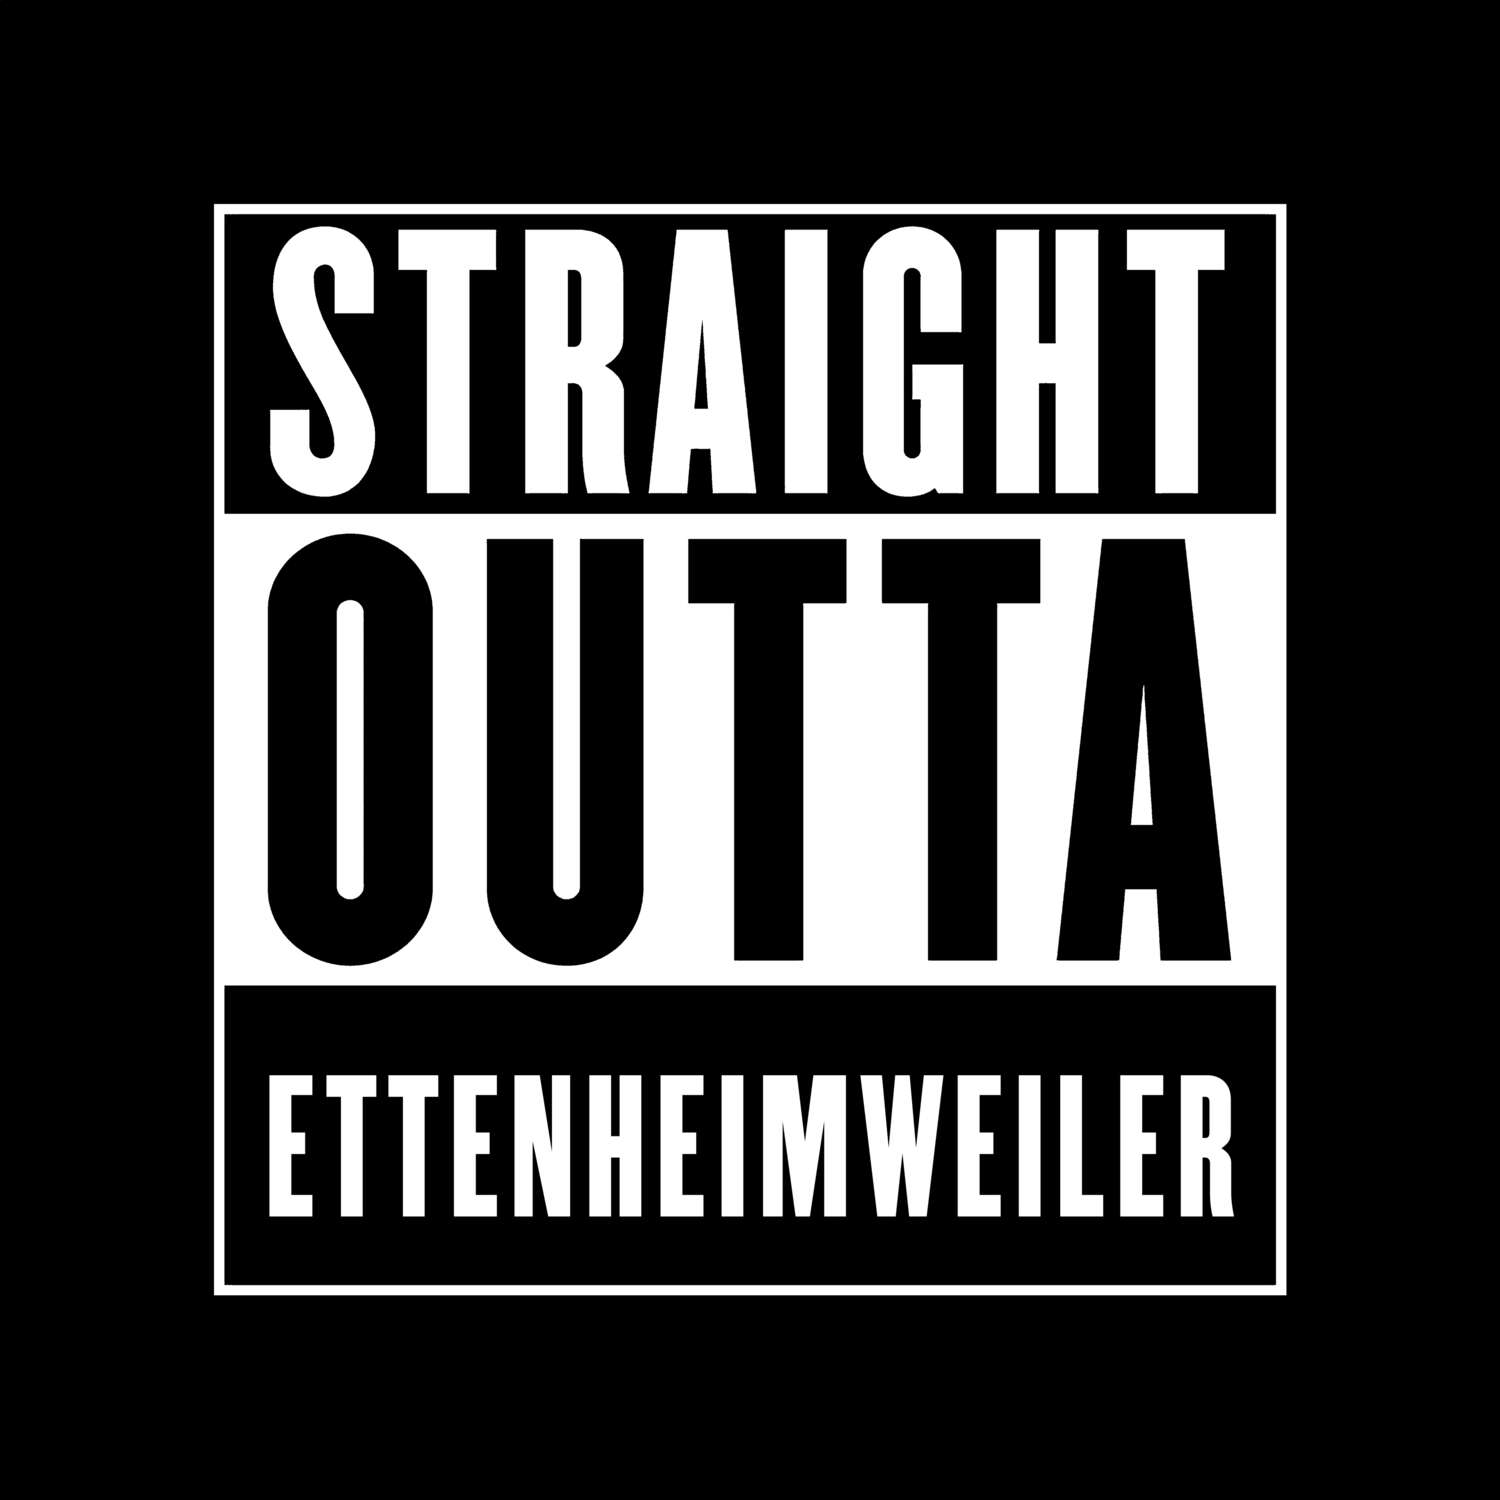 Ettenheimweiler T-Shirt »Straight Outta«